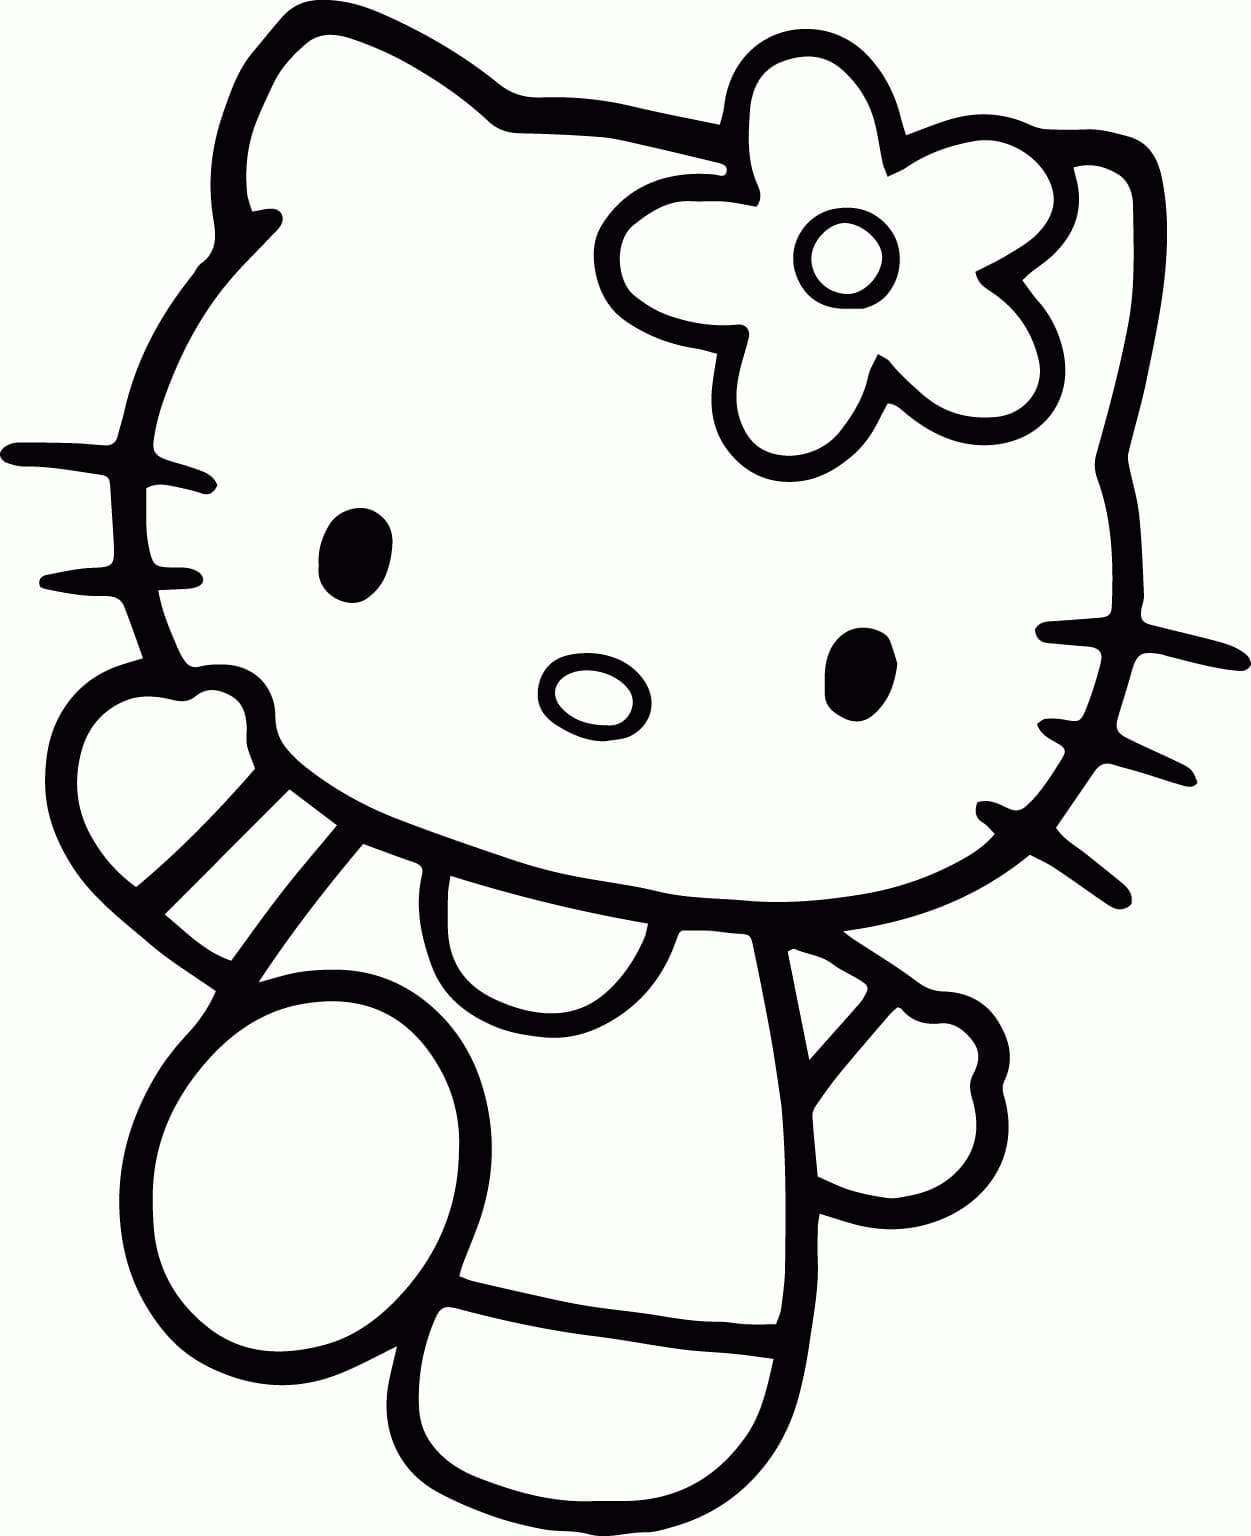 Søde Hello Kitty Tegninger til Farvelægning